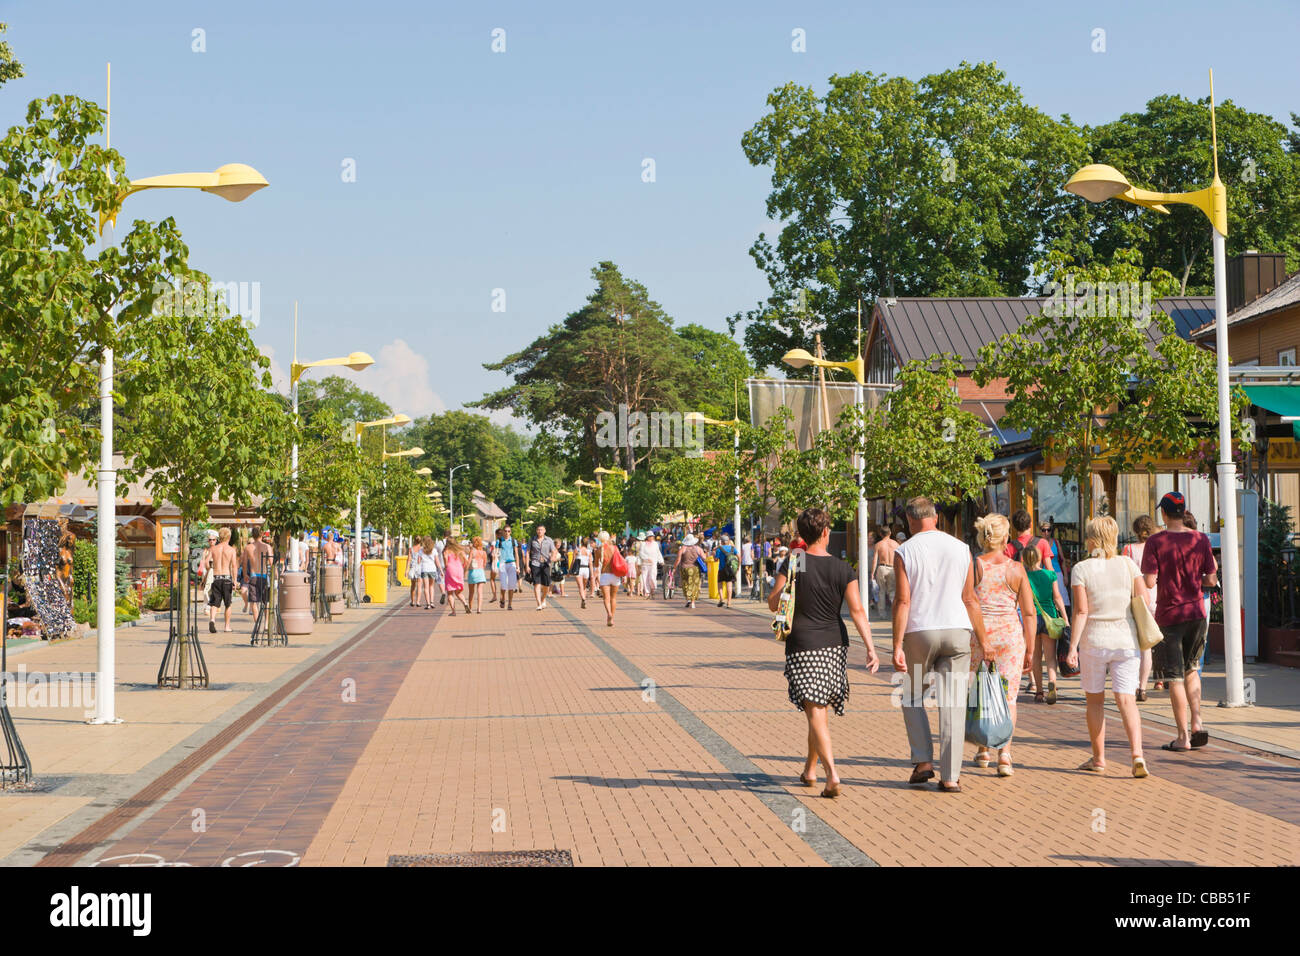 J Basanaviciaus gatve, J Basanaviciaus Street, pedestrian street leading to beach, Palanga, Lithuania Stock Photo